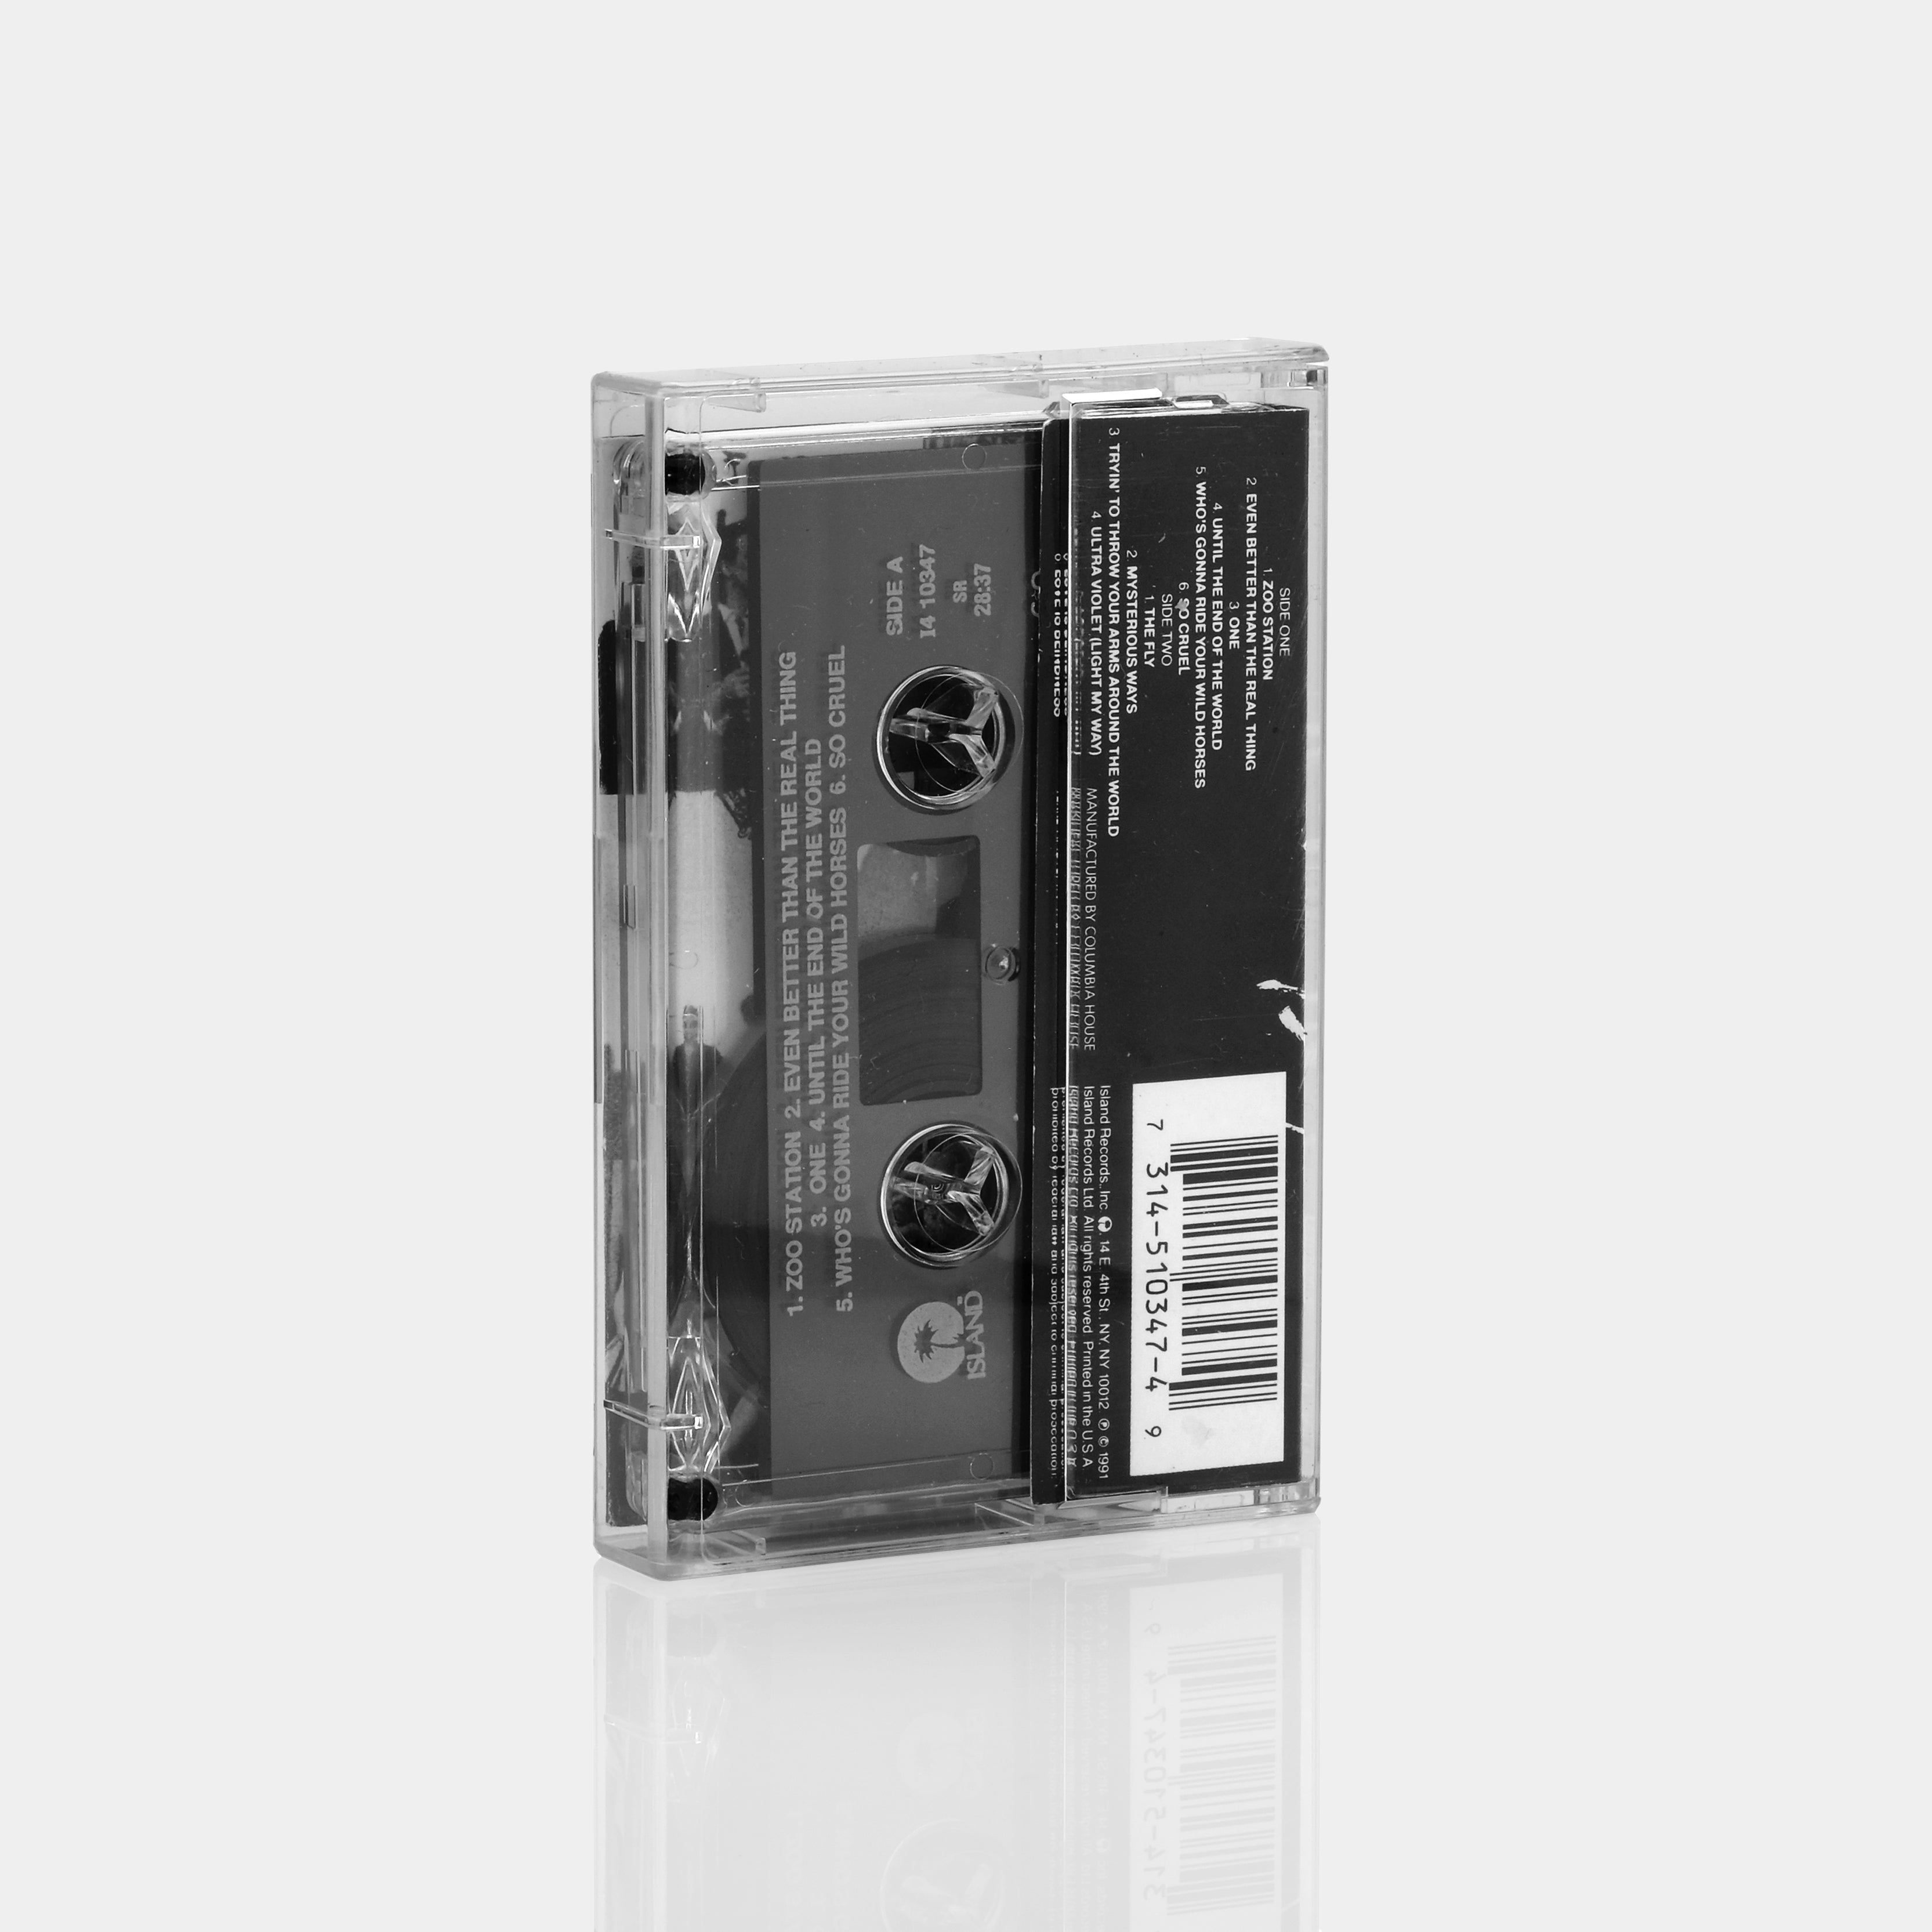 U2 - Achtung Baby Cassette Tape